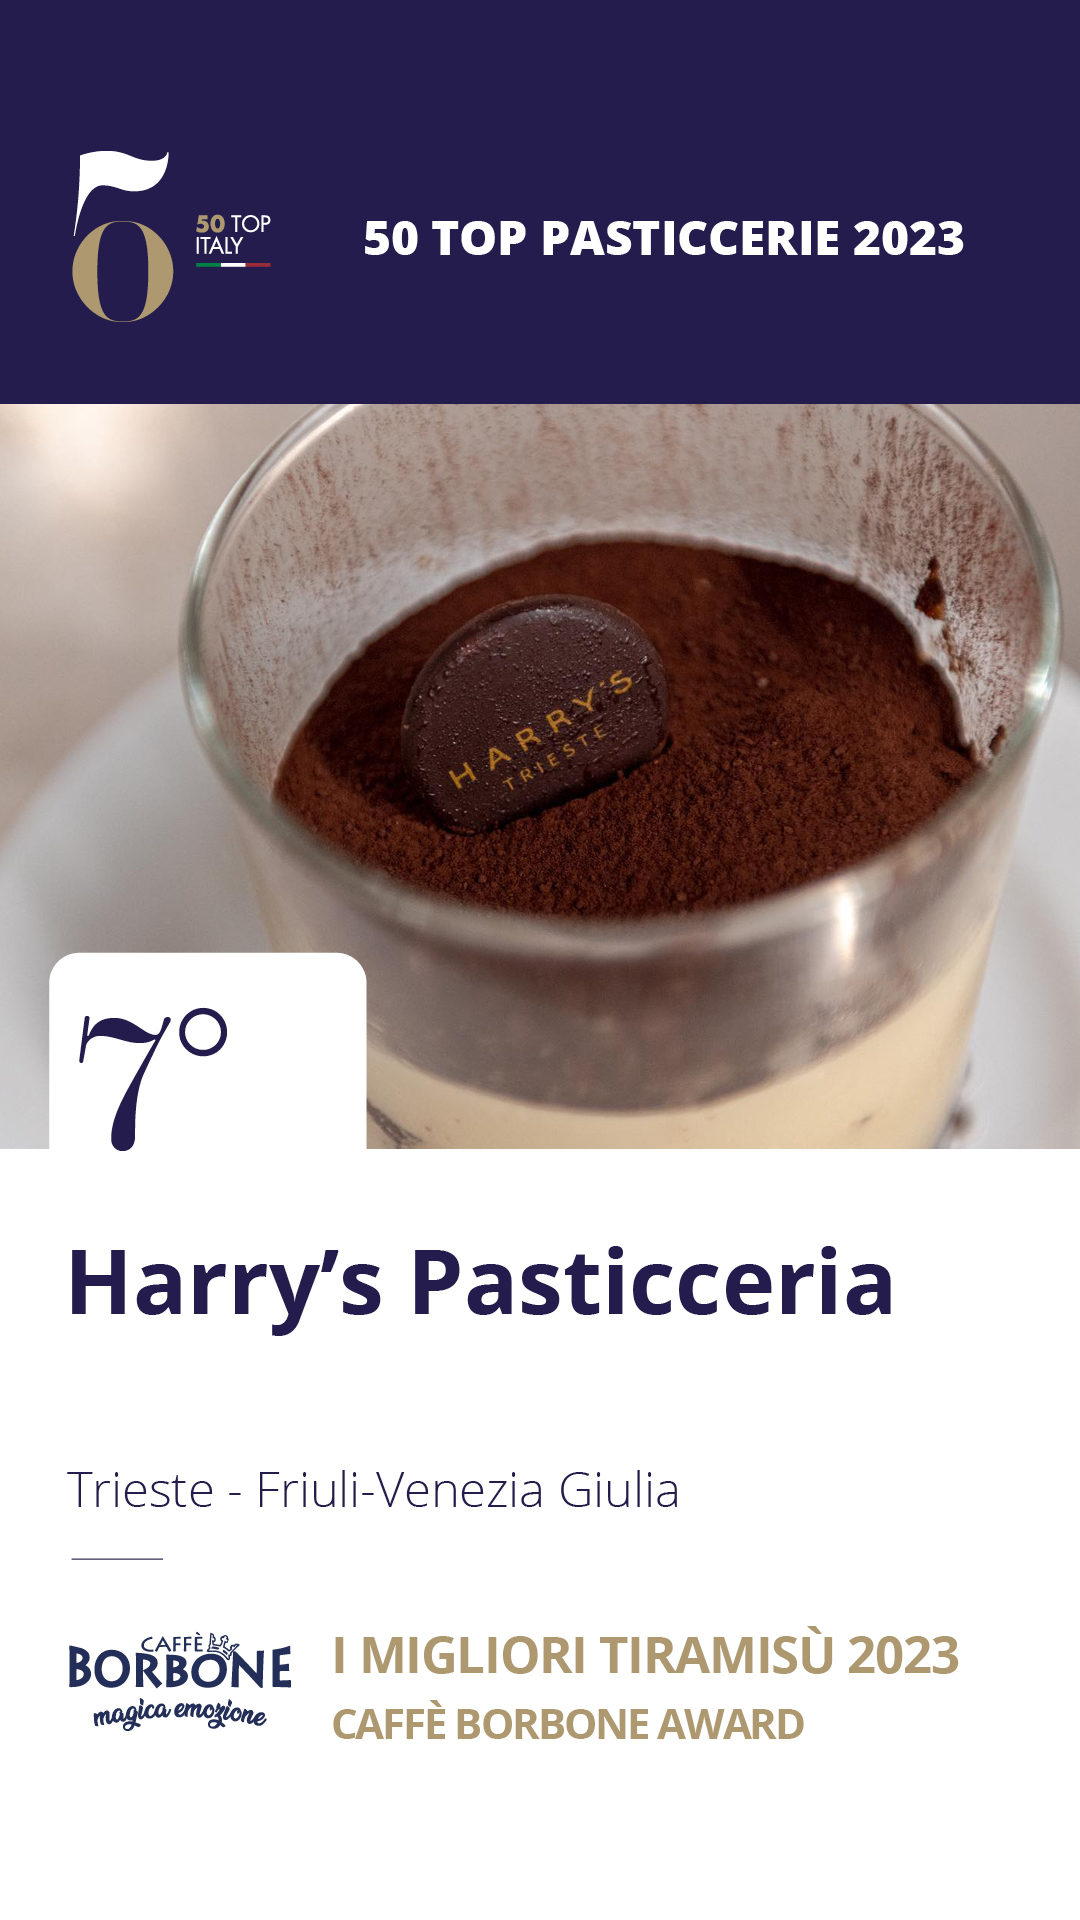 7. Harry’s Pasticceria – Trieste, Friuli-Venezia Giulia